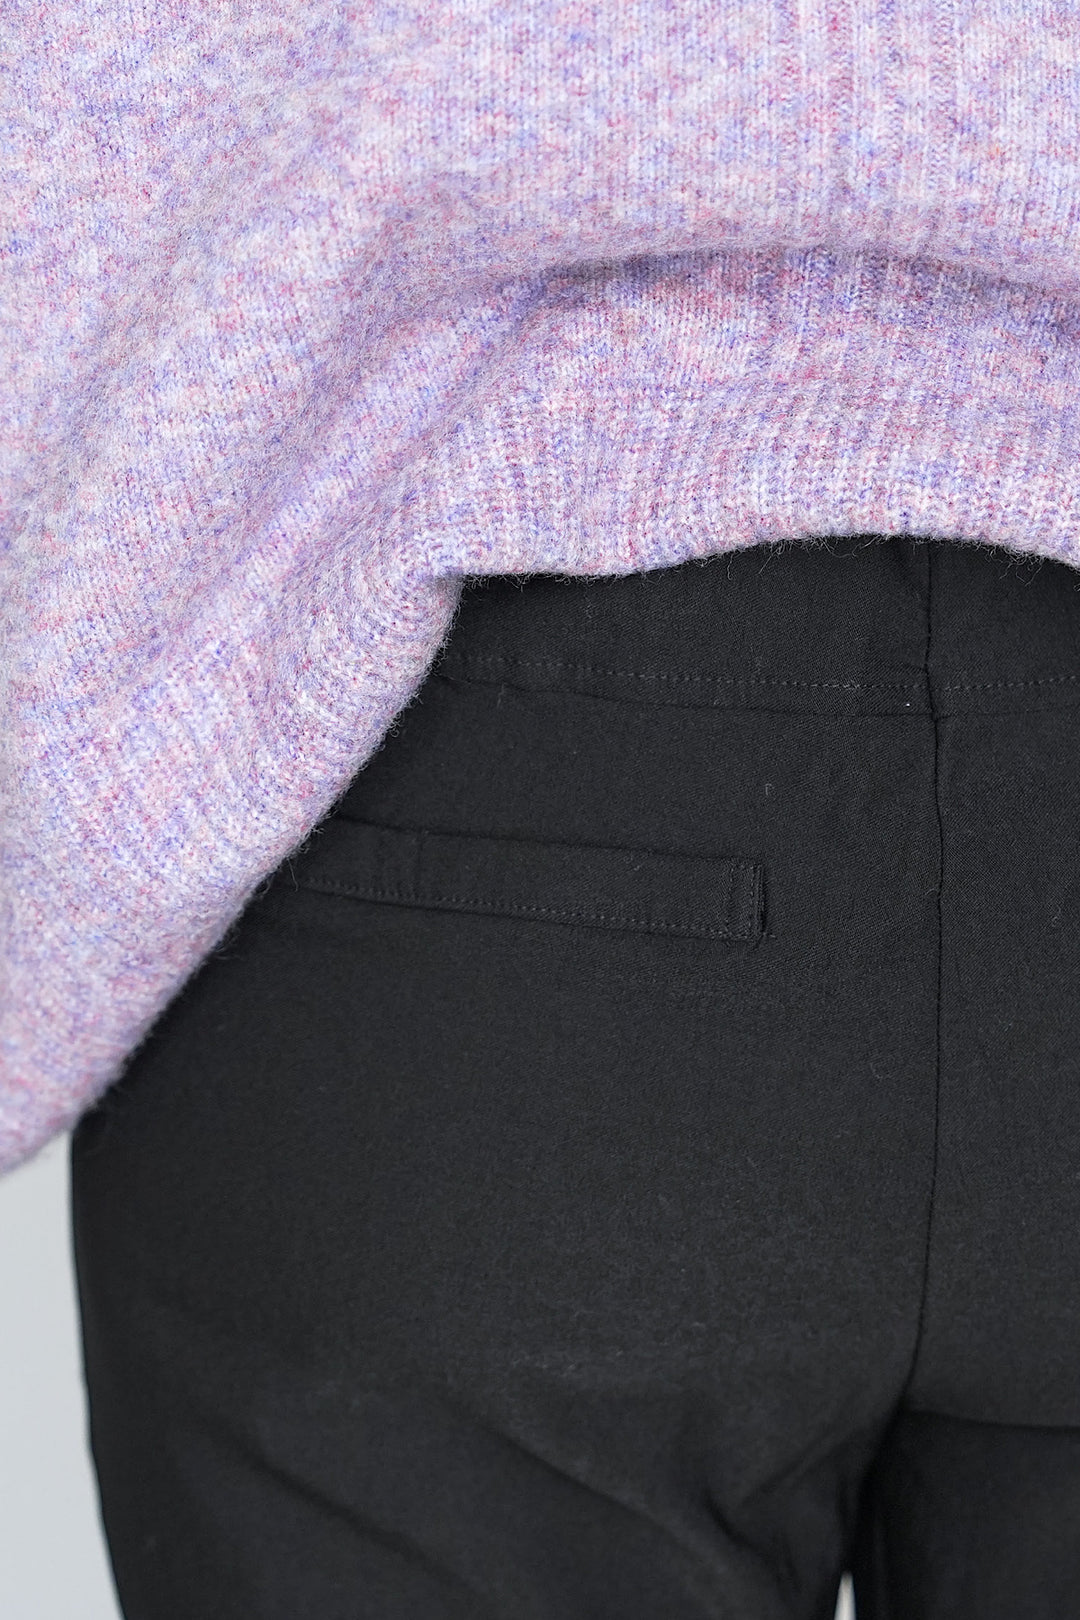 Fleece-lined stretch pants